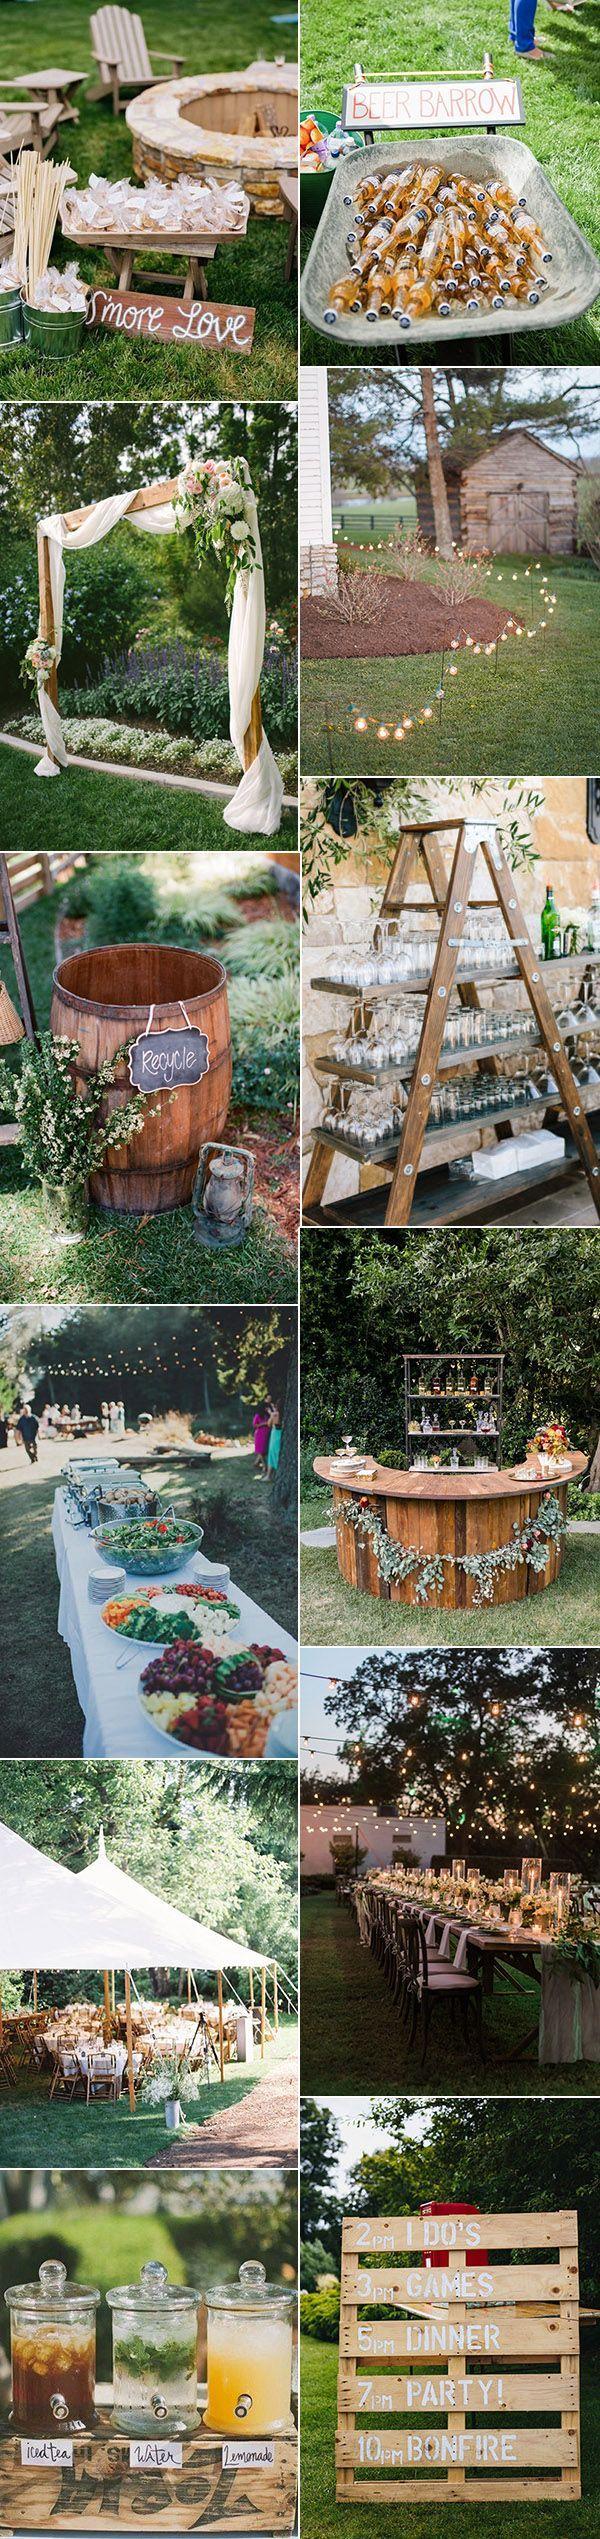 Wedding - 20 Great Backyard Wedding Ideas That Inspire